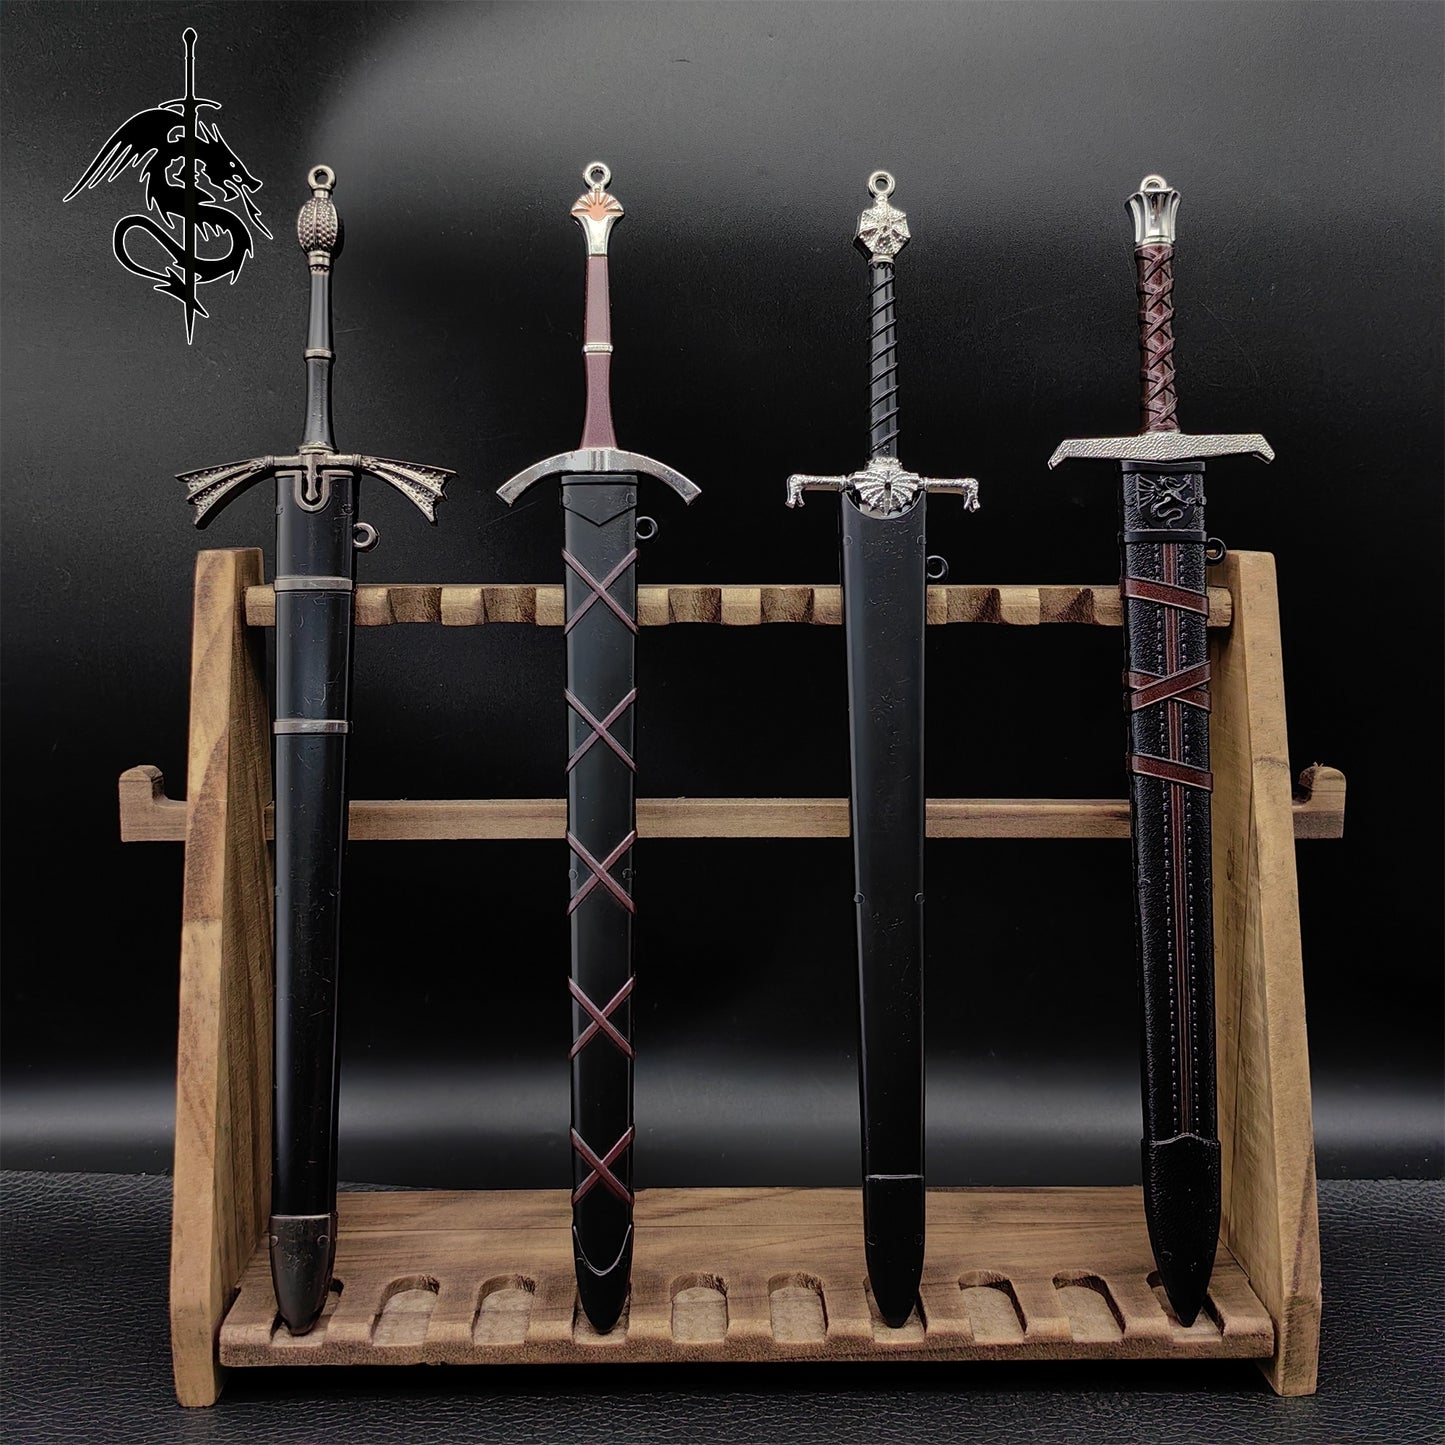 GOT Sword Blunt Blade Replica 4 In 1 Gift Box 